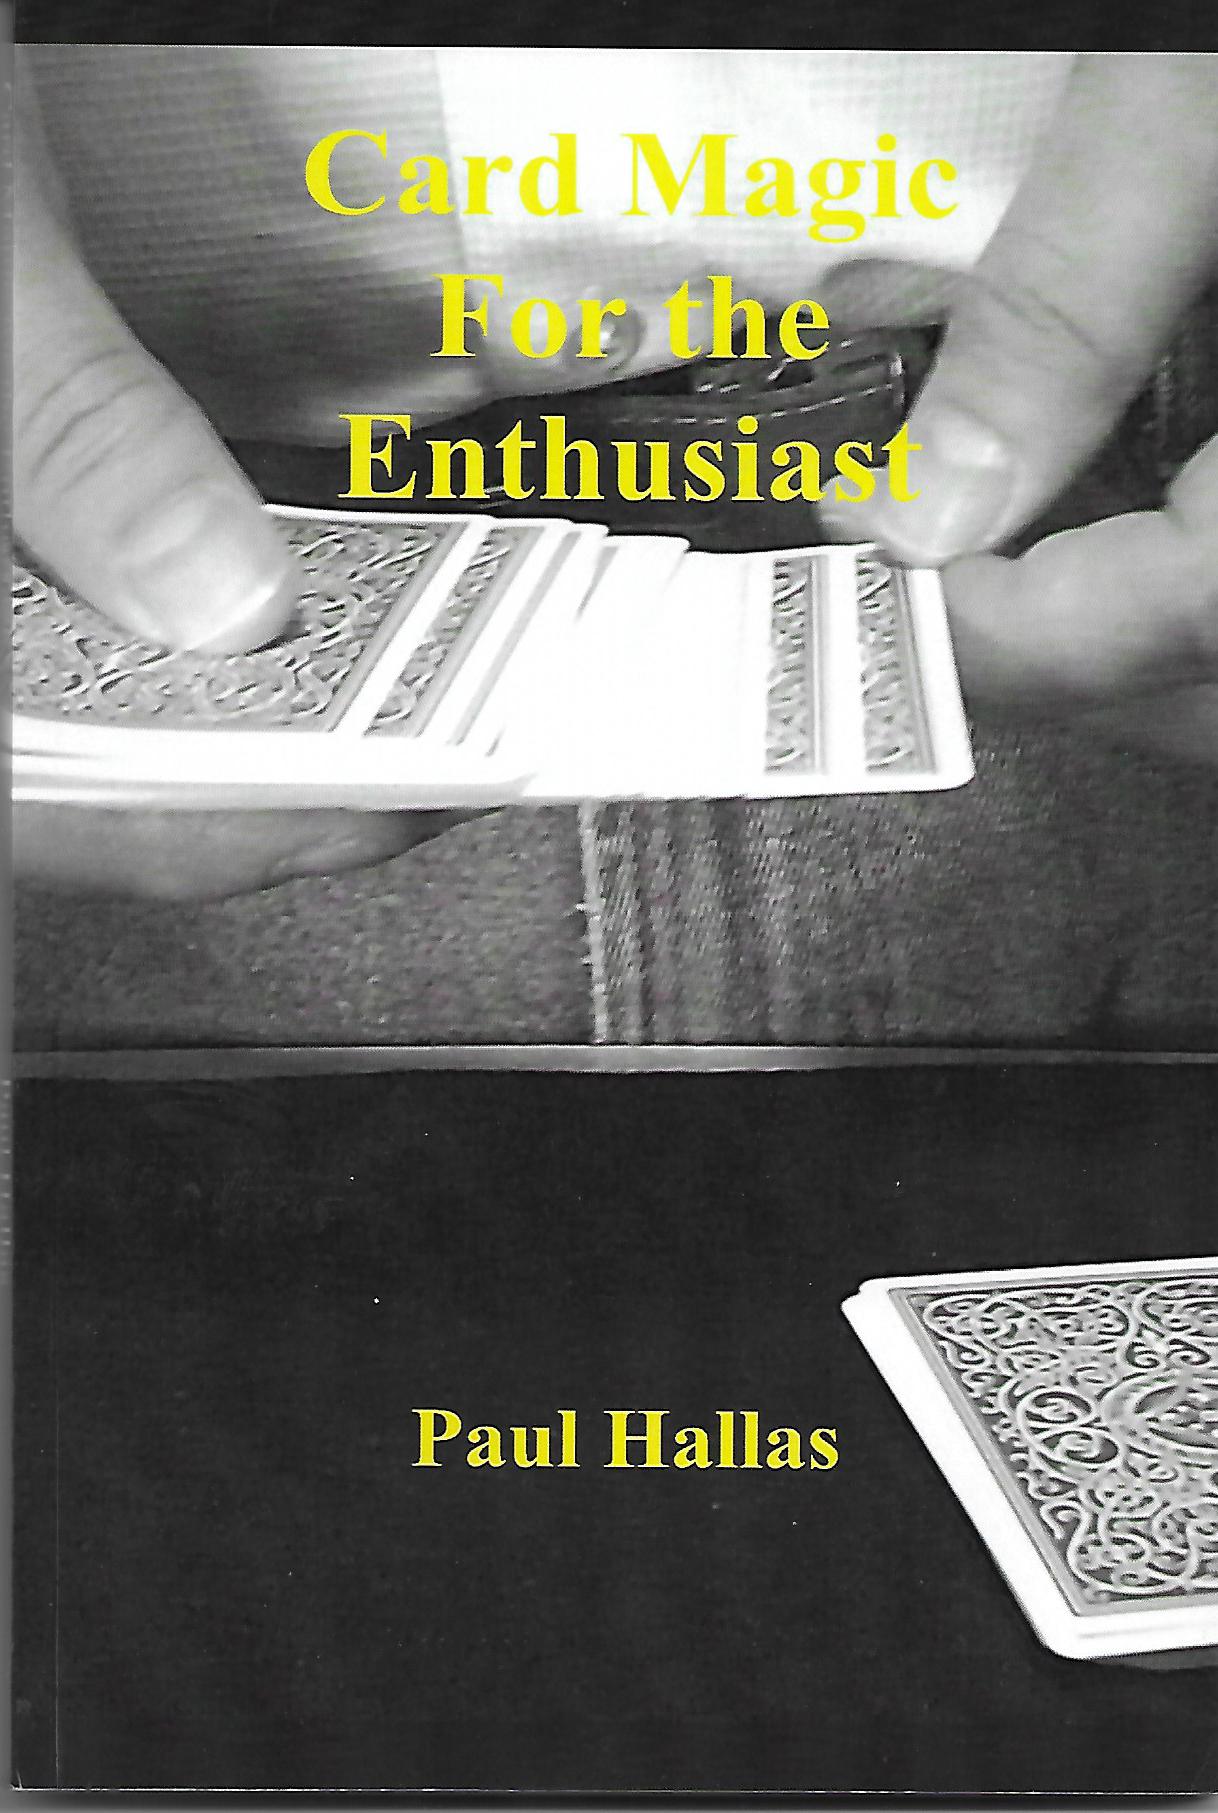 Card Enthusiast